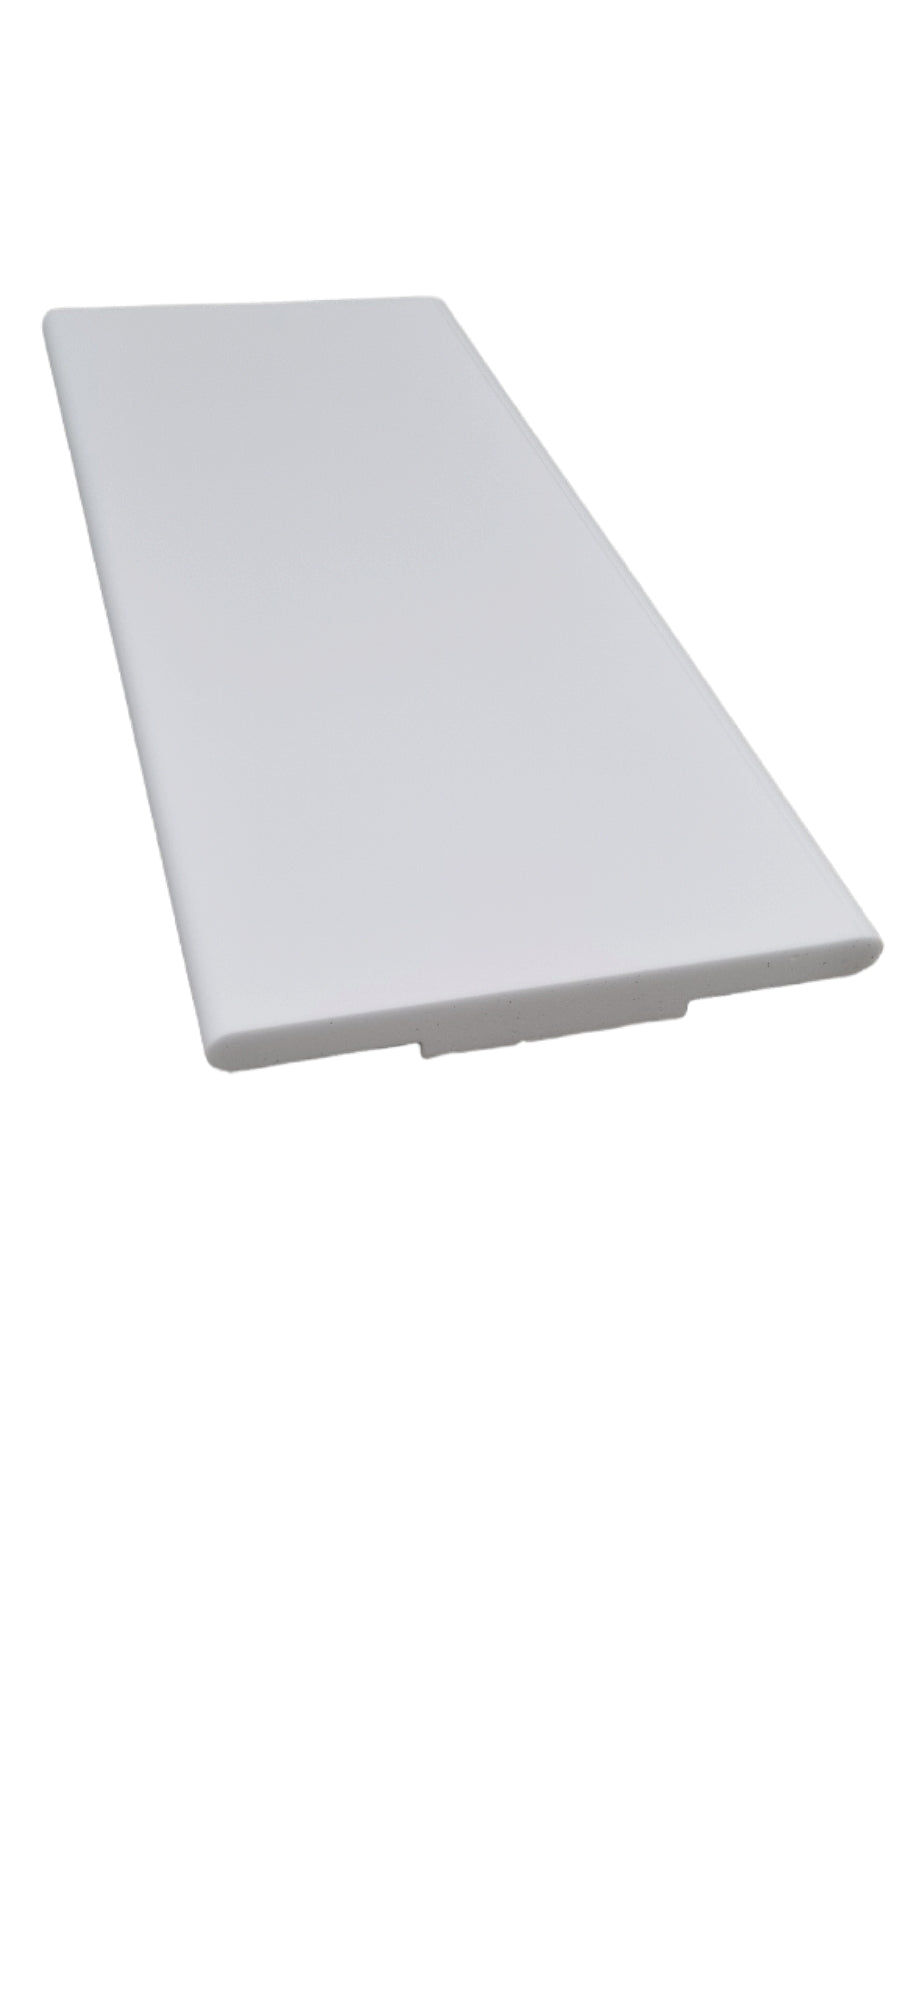 Pro-coustix Melaflex Ceiling Panels Baffles Offset Flat 1200x500x50mm